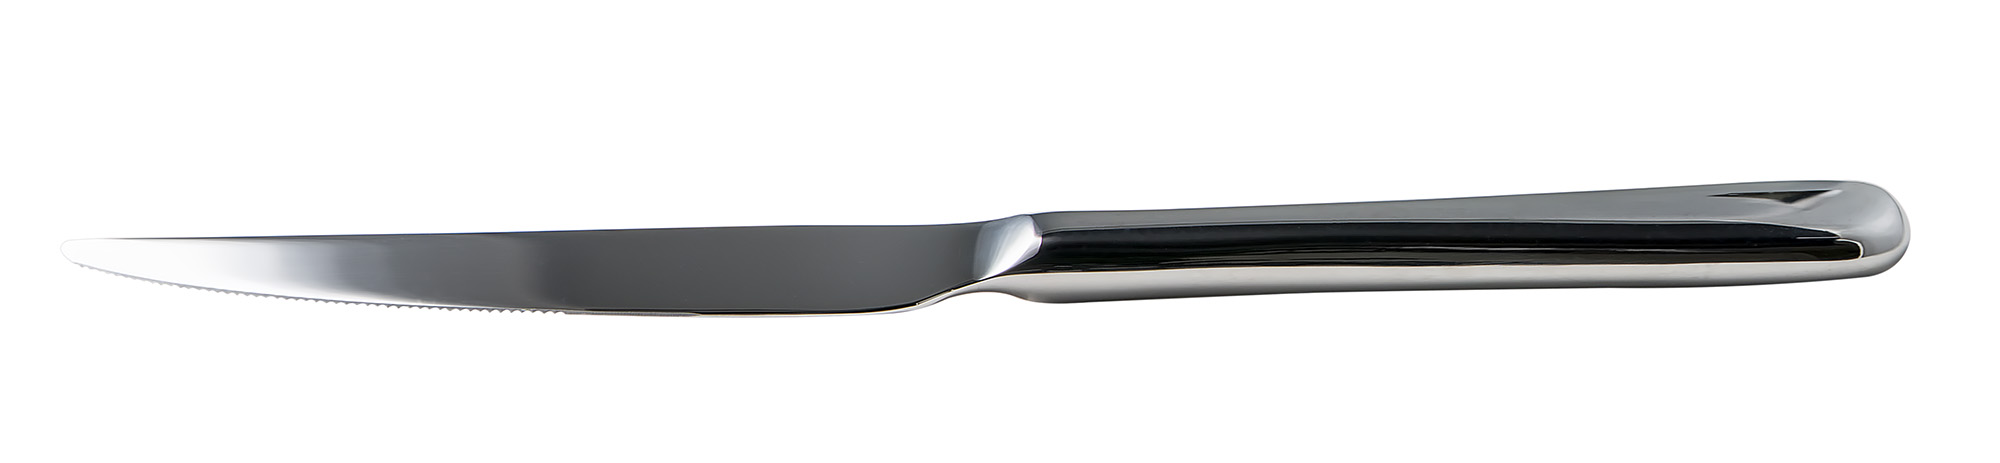 Elegance Table Knife (A5604)